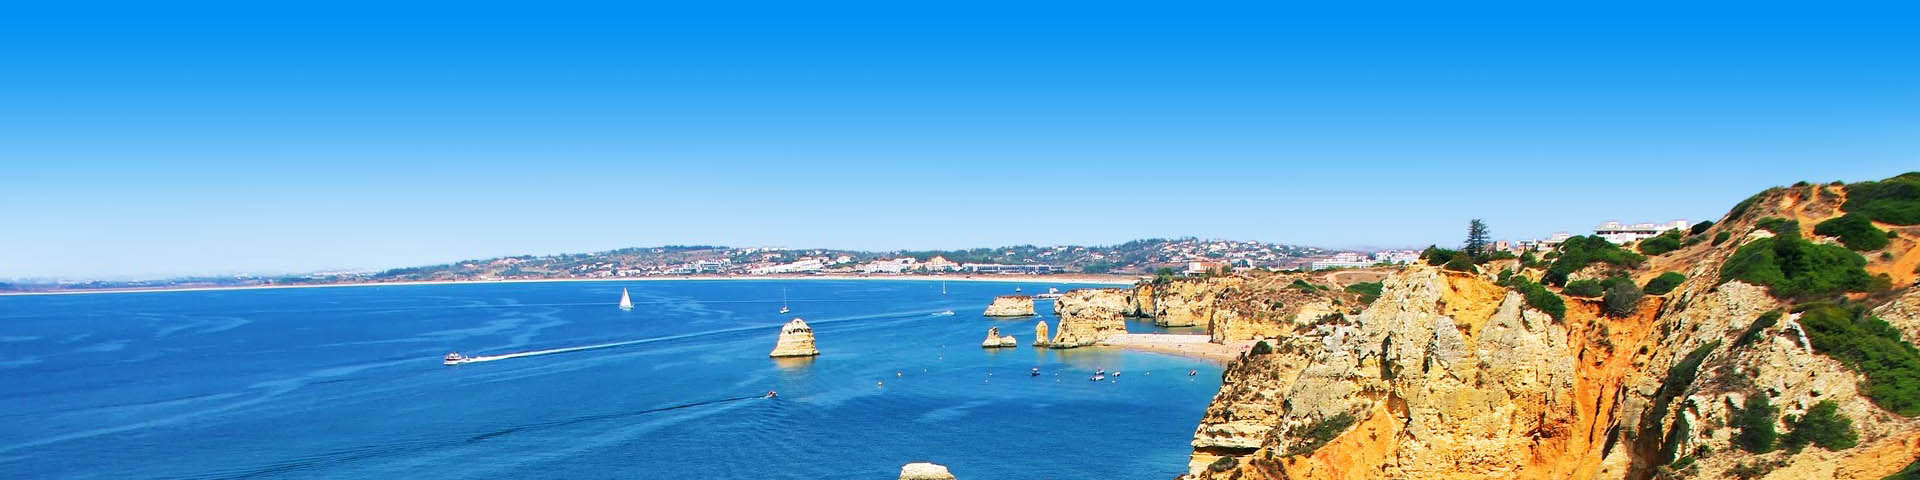 Prachtige rotsachtige kust in Portugal